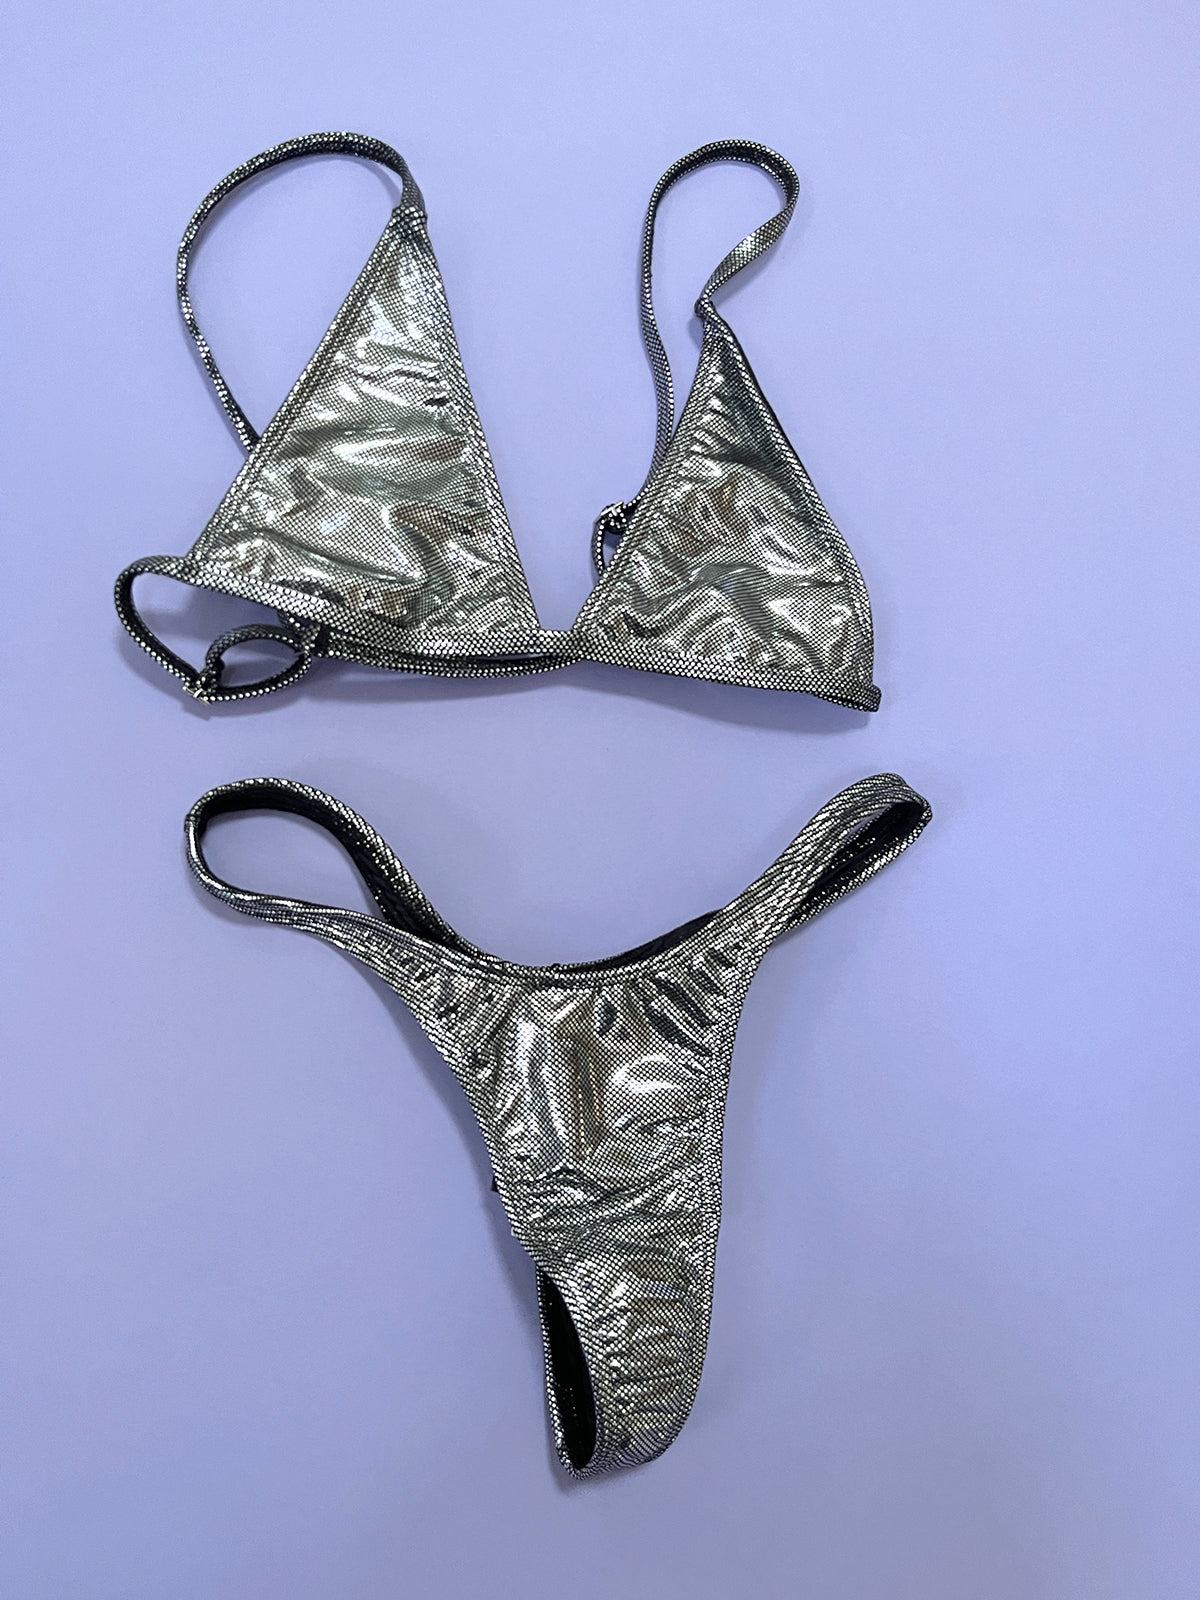 Minimale Animale: Nolita Thong Bikini Bottom - Silver Chrome